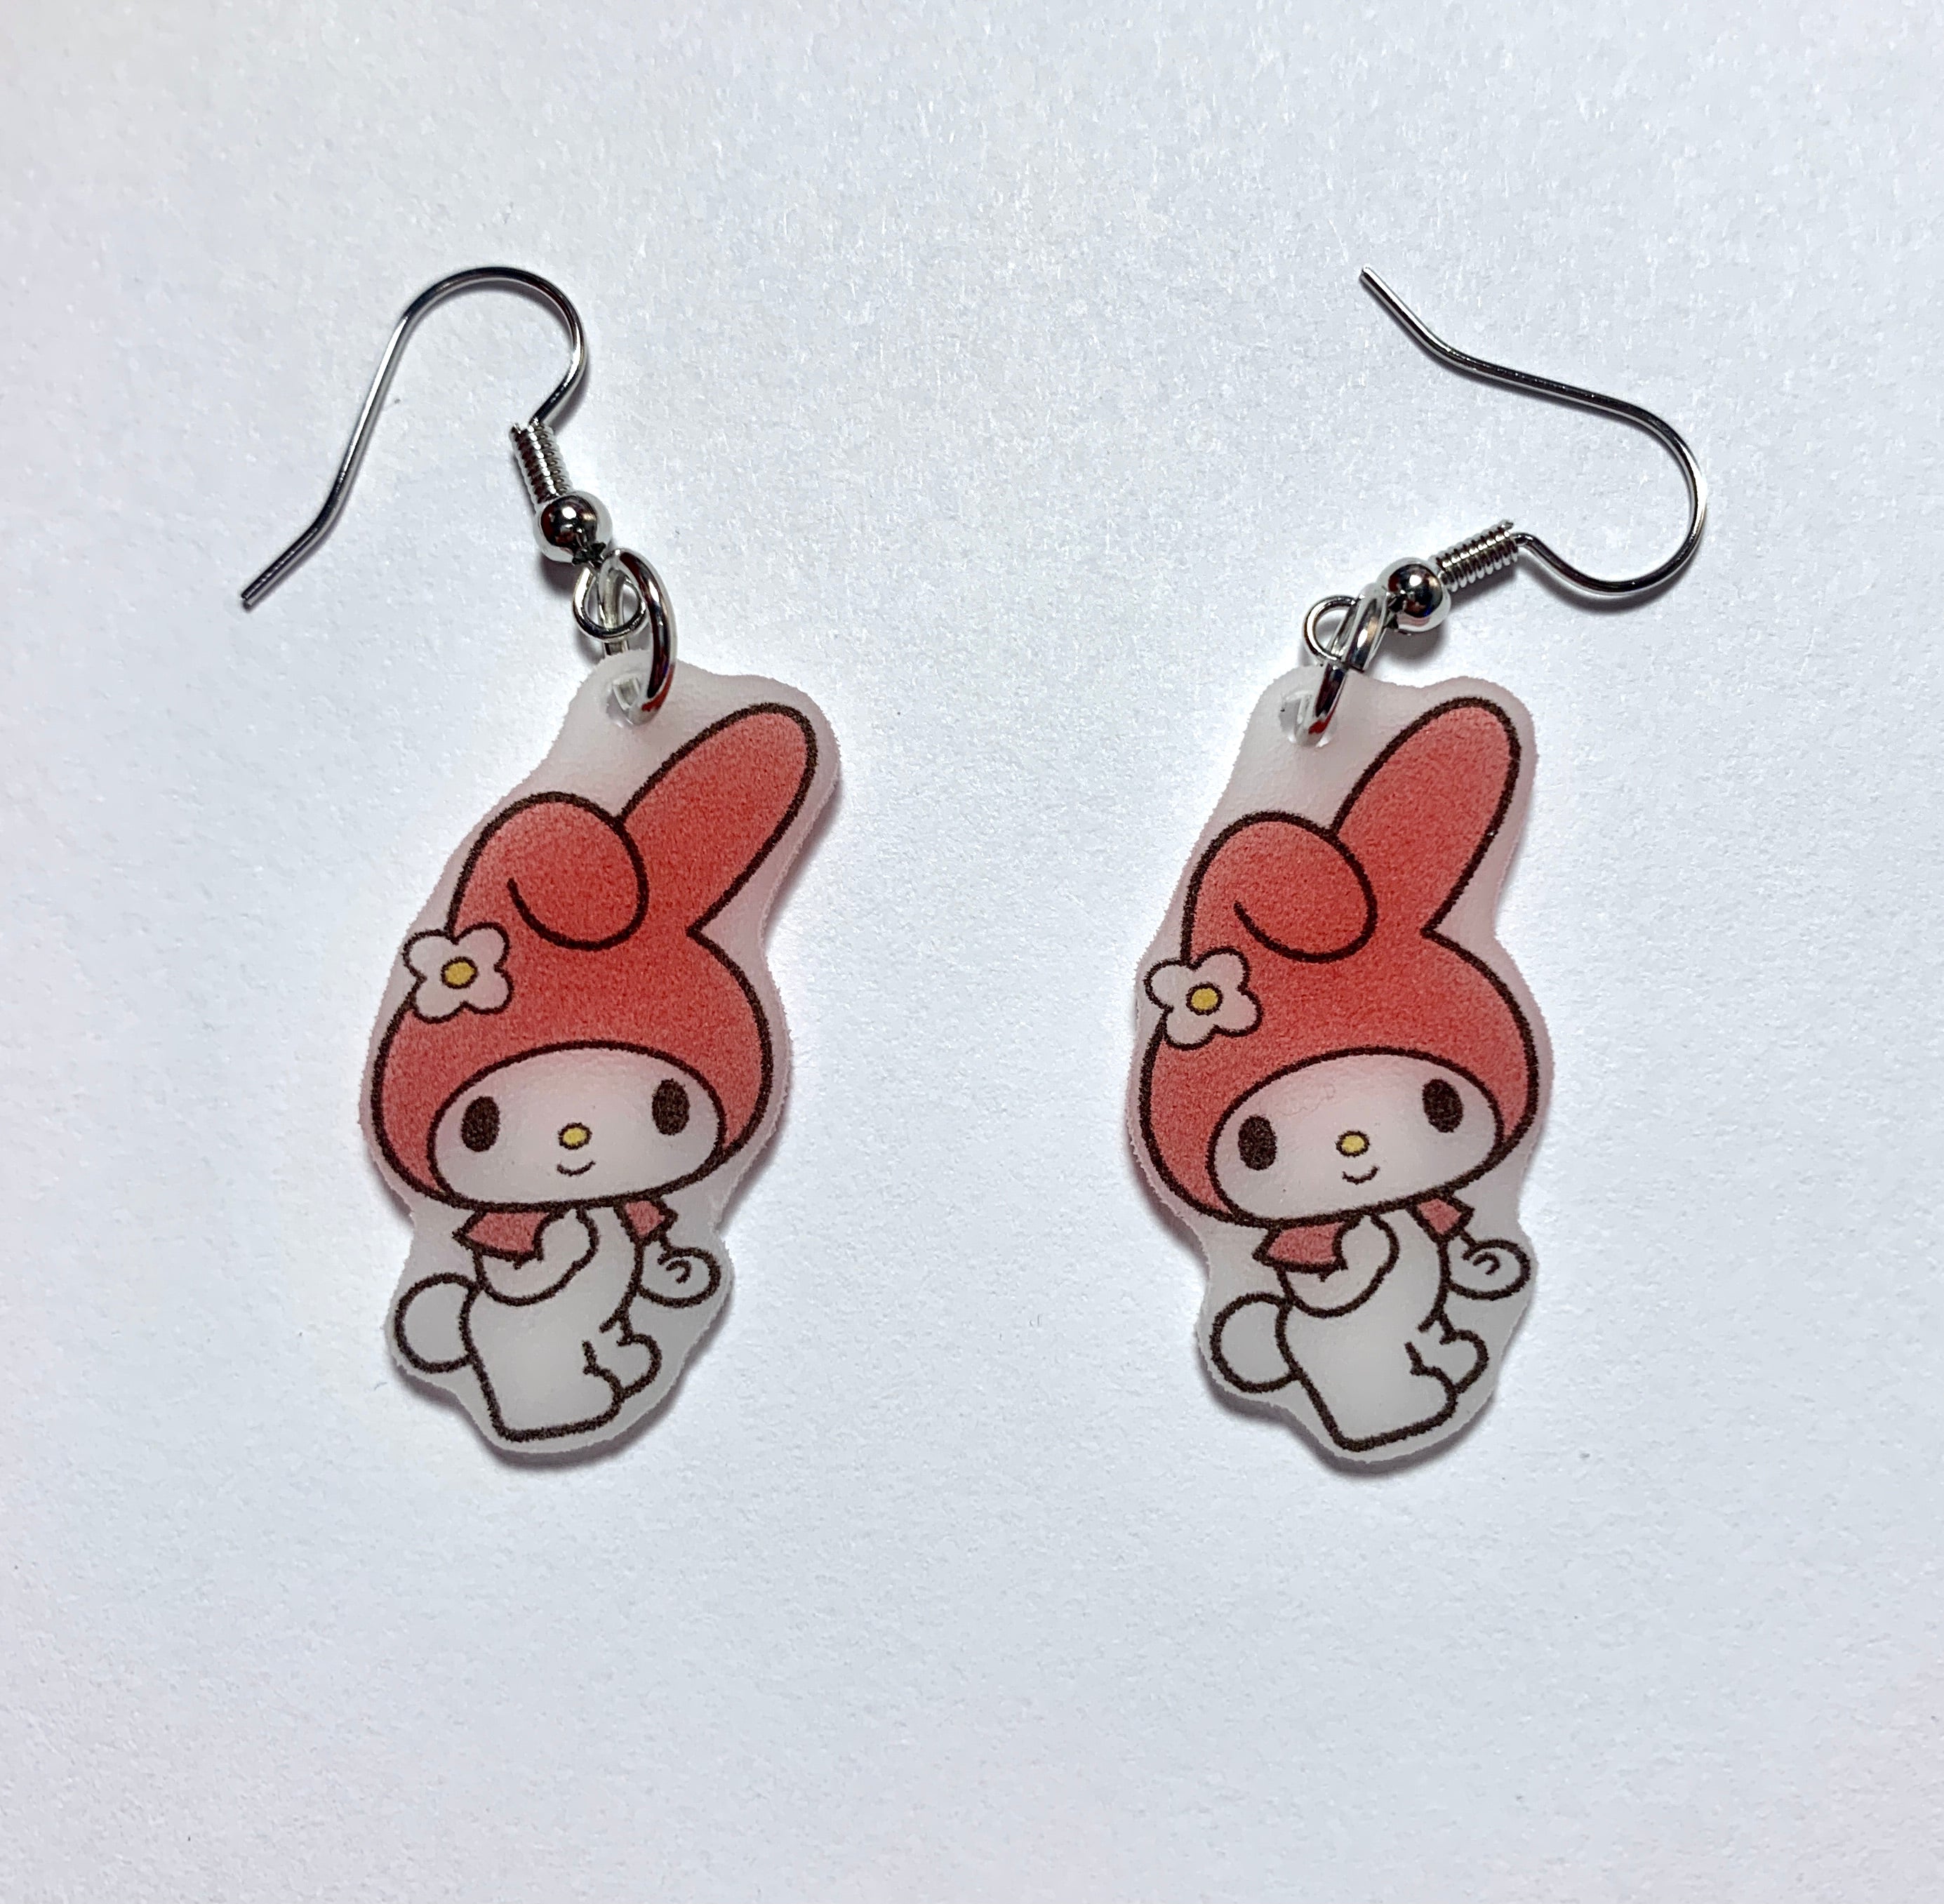 Sanrio Collection Handmade Earrings!